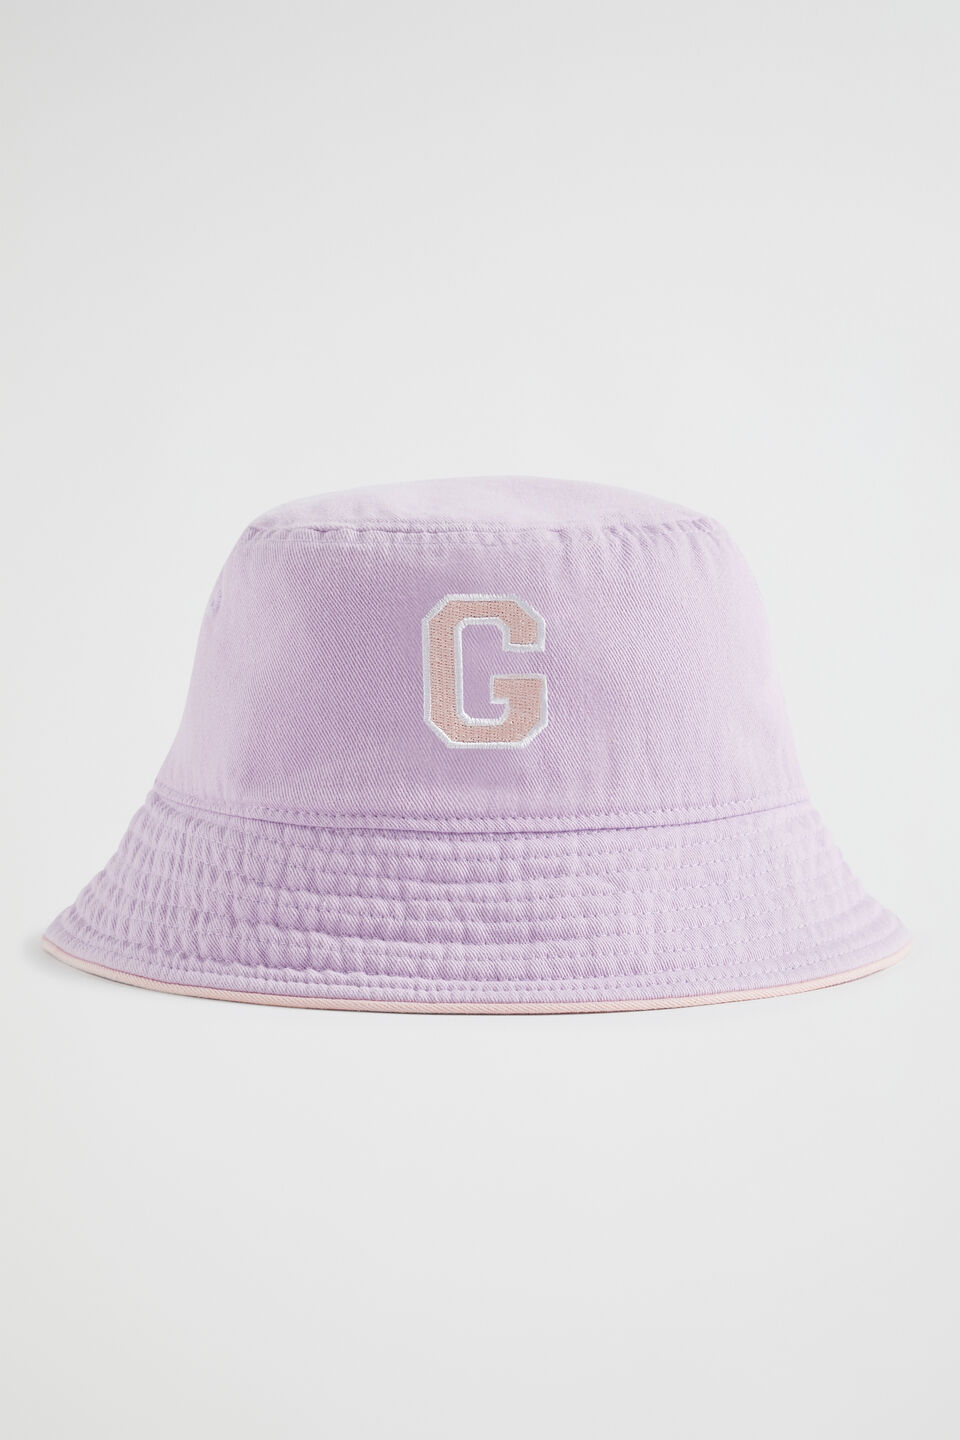 Initial Emb Bucket Hat  G